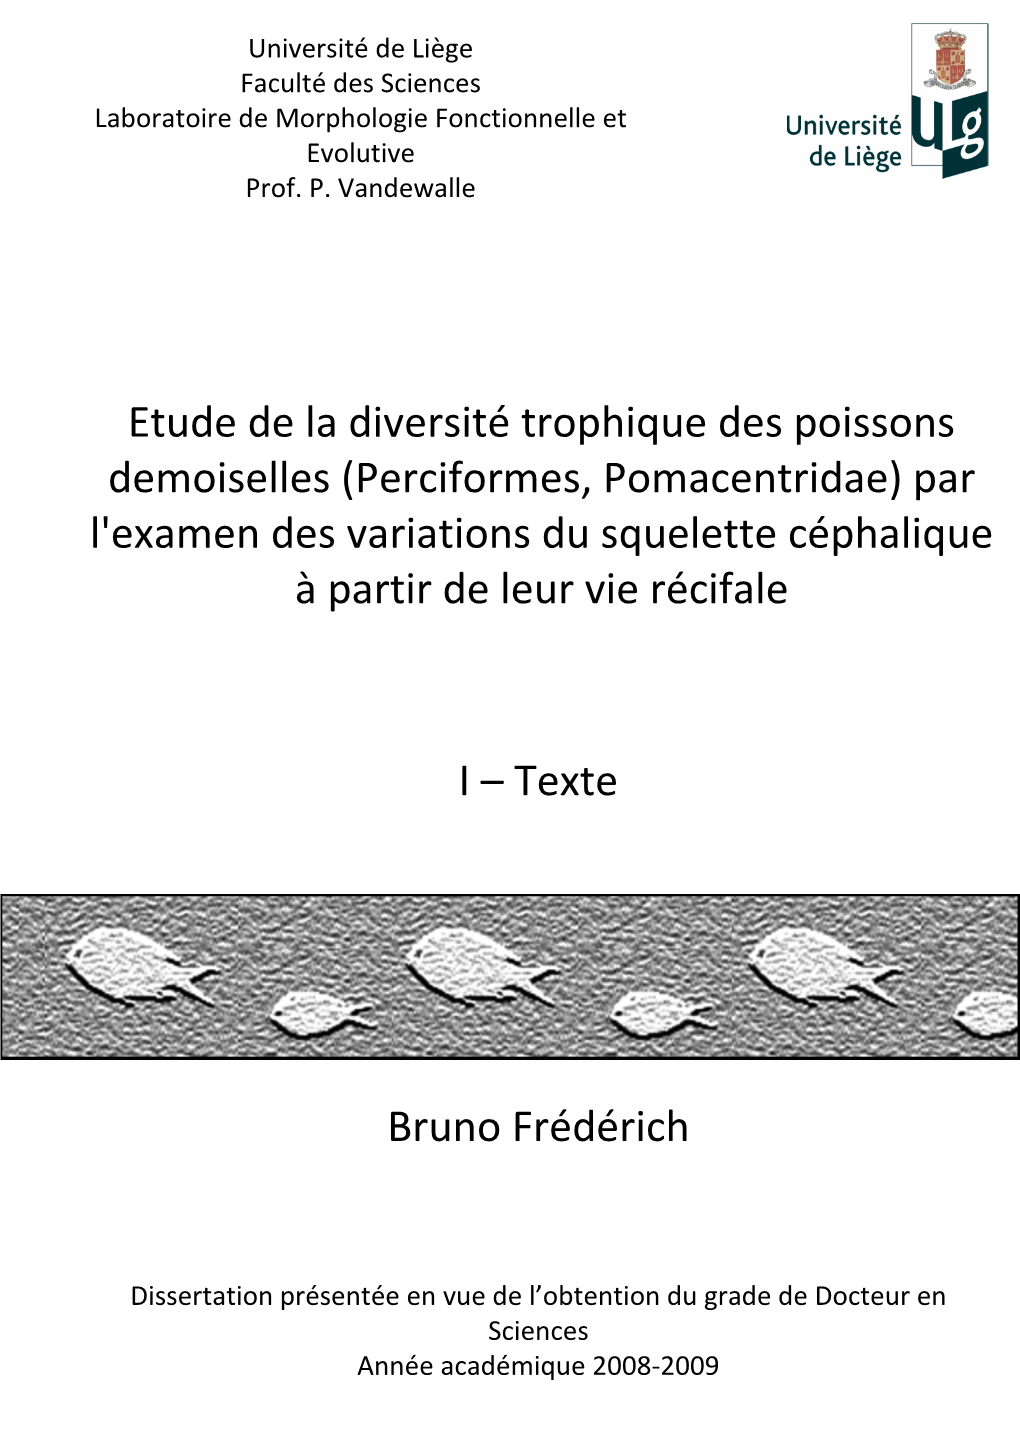 Bruno Frédérich I